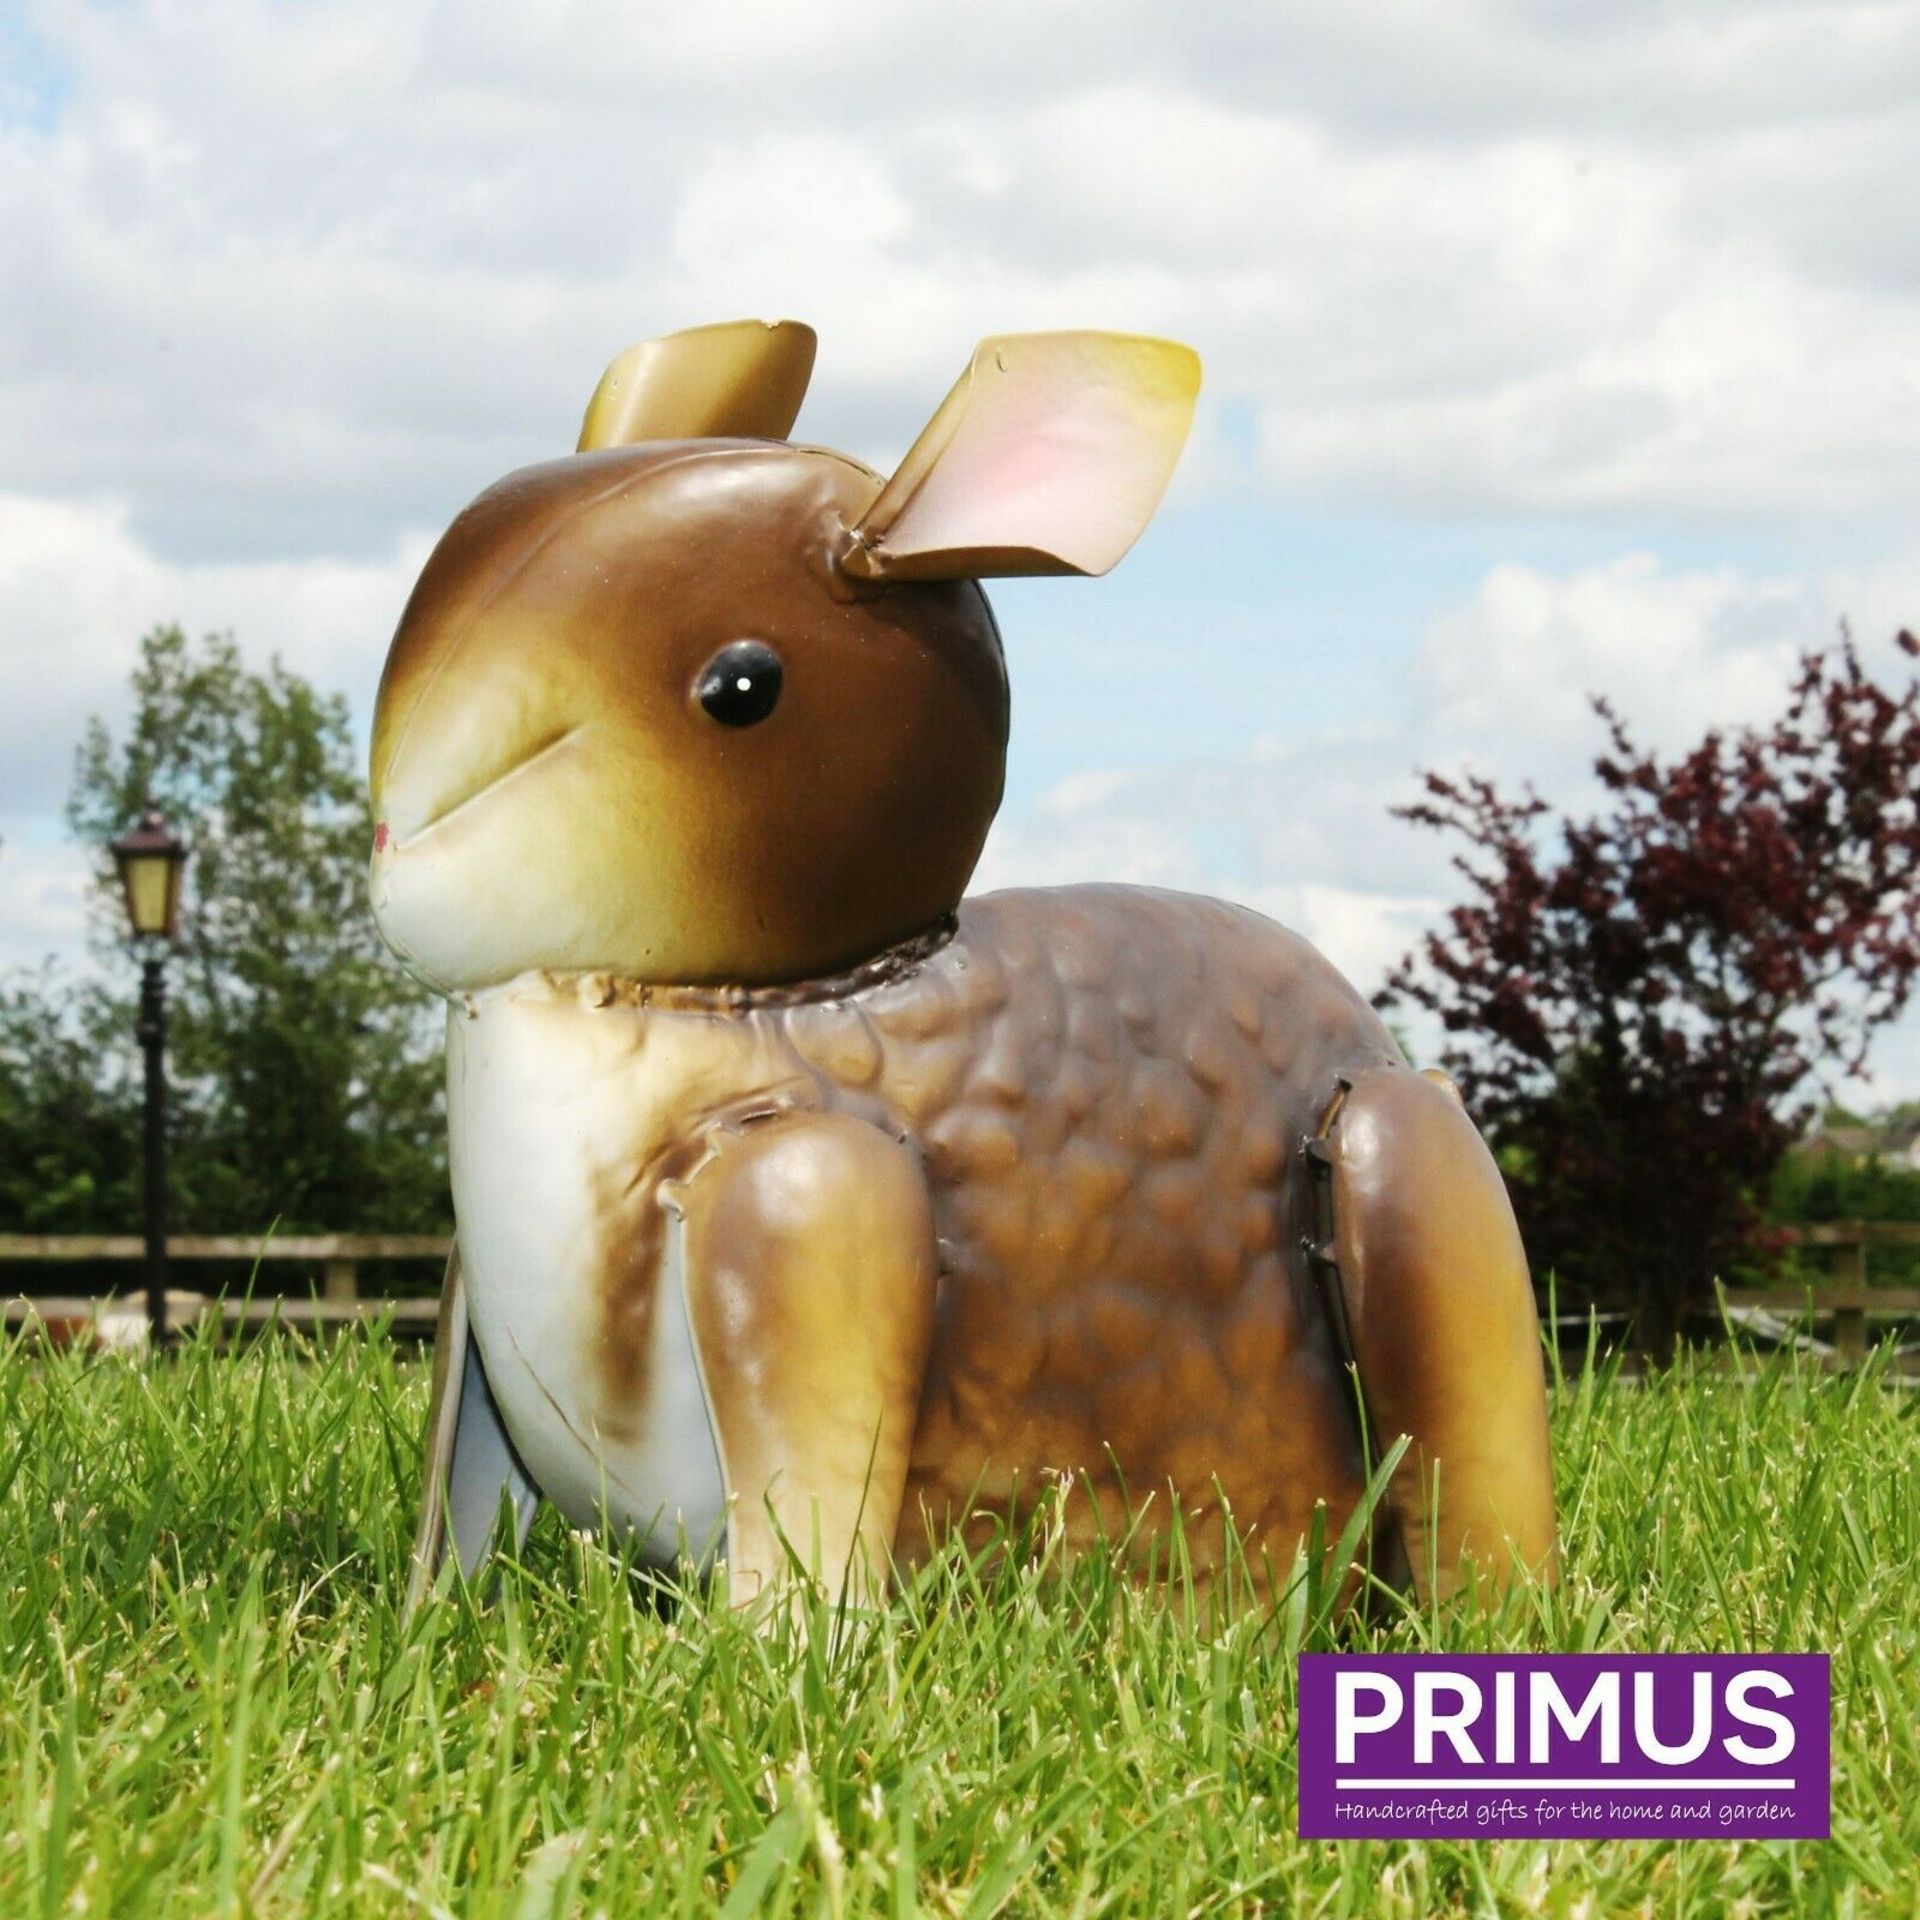 Primus Metal Rabbit Garden Ornament - Brown / Grey Colours - 10 Units Per Lot - Image 5 of 5